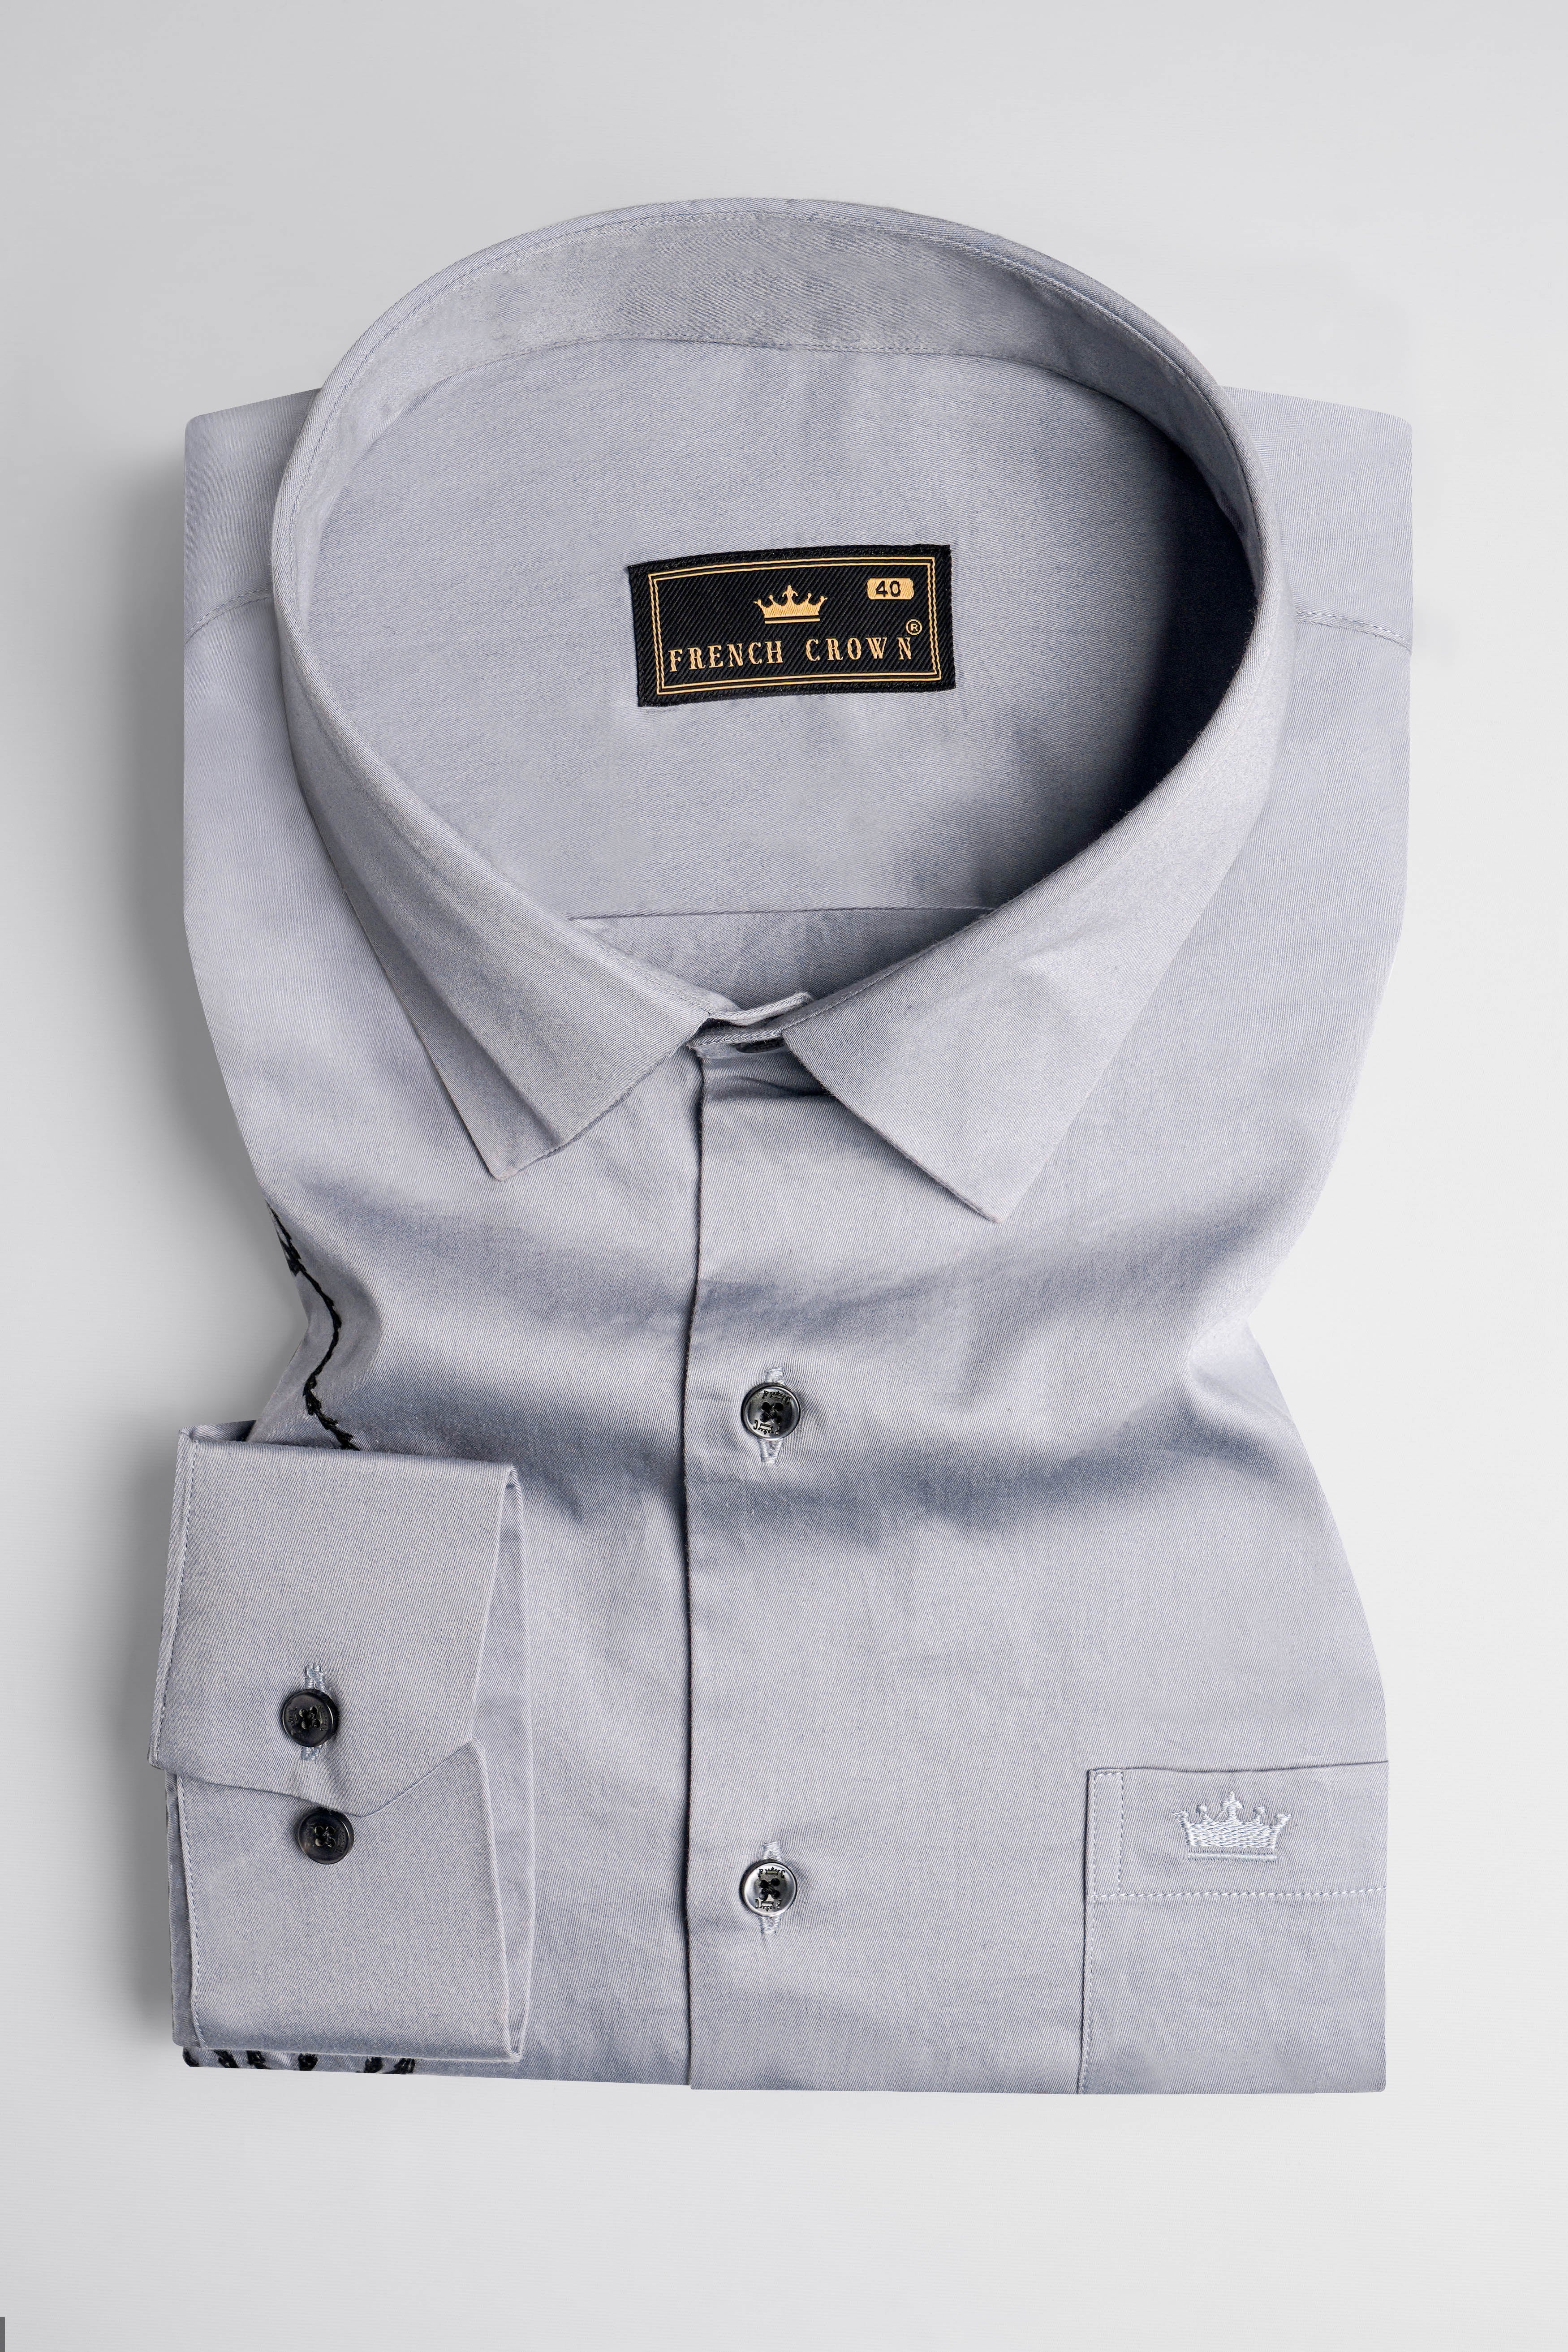 Metallic Gray Embroidered Royal Oxford Designer Shirt